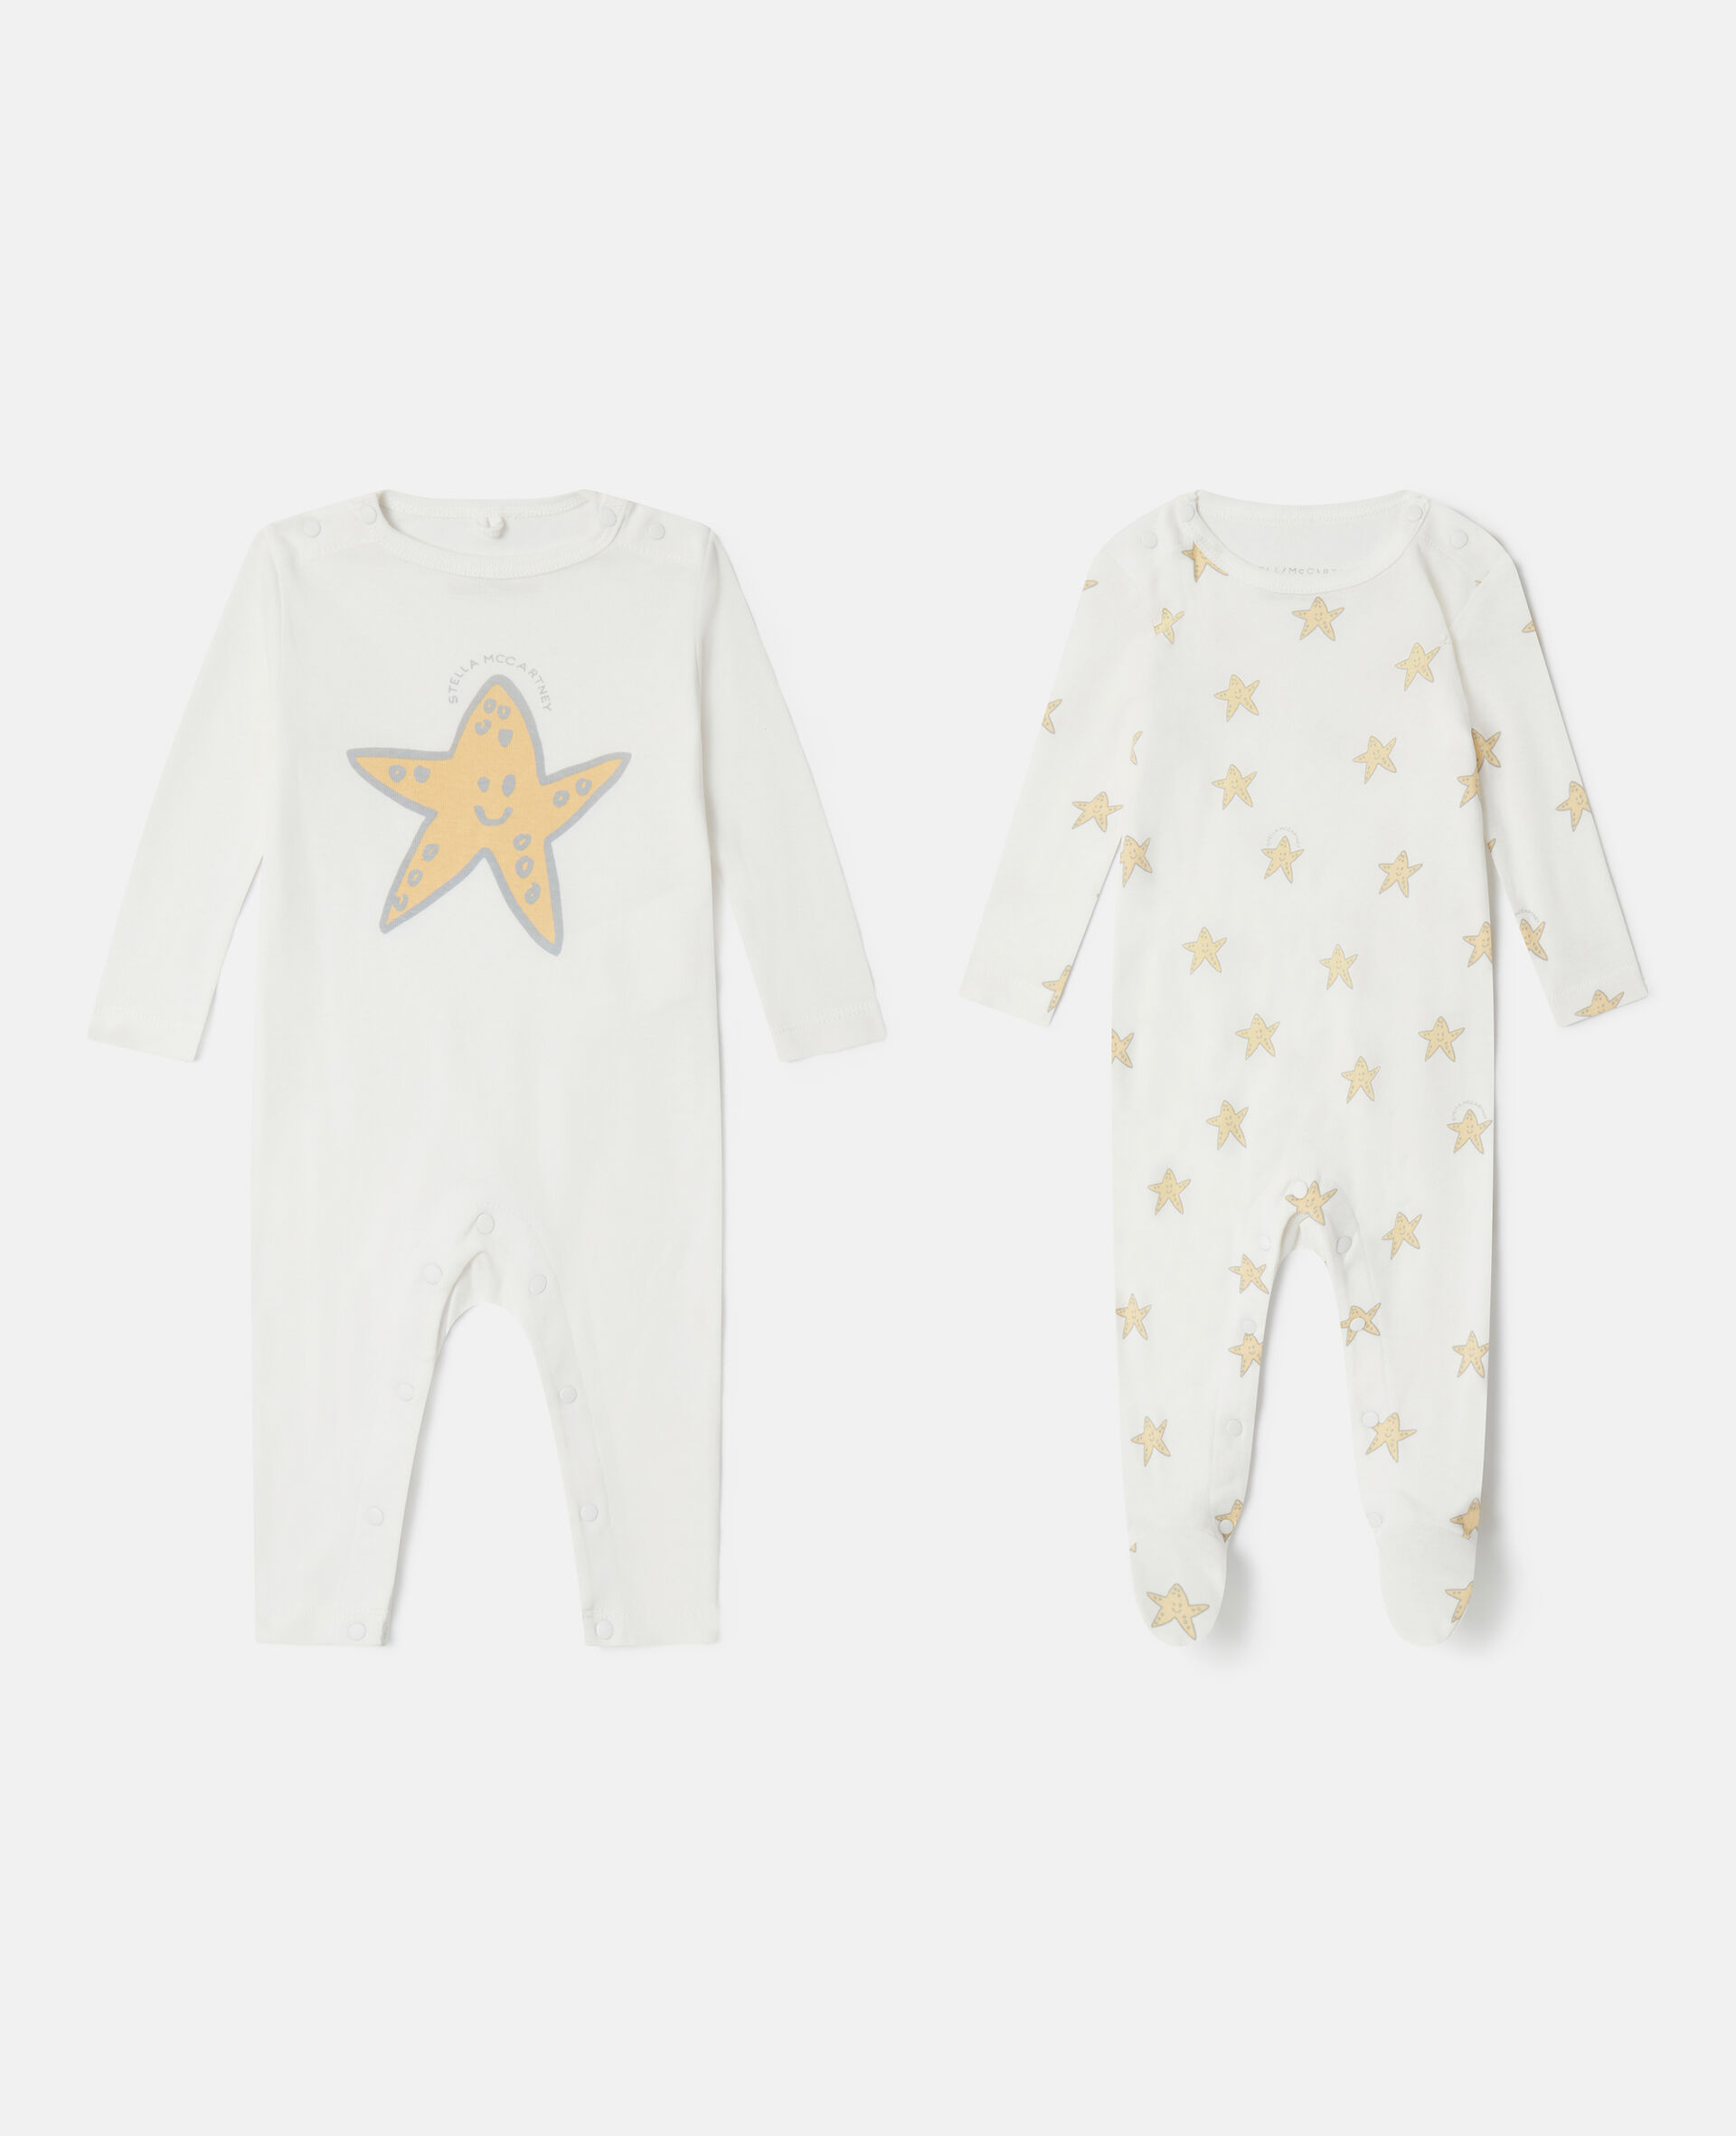 Smiling Stella Star Print Sleepsuit Set-Fantaisie-large image number 0